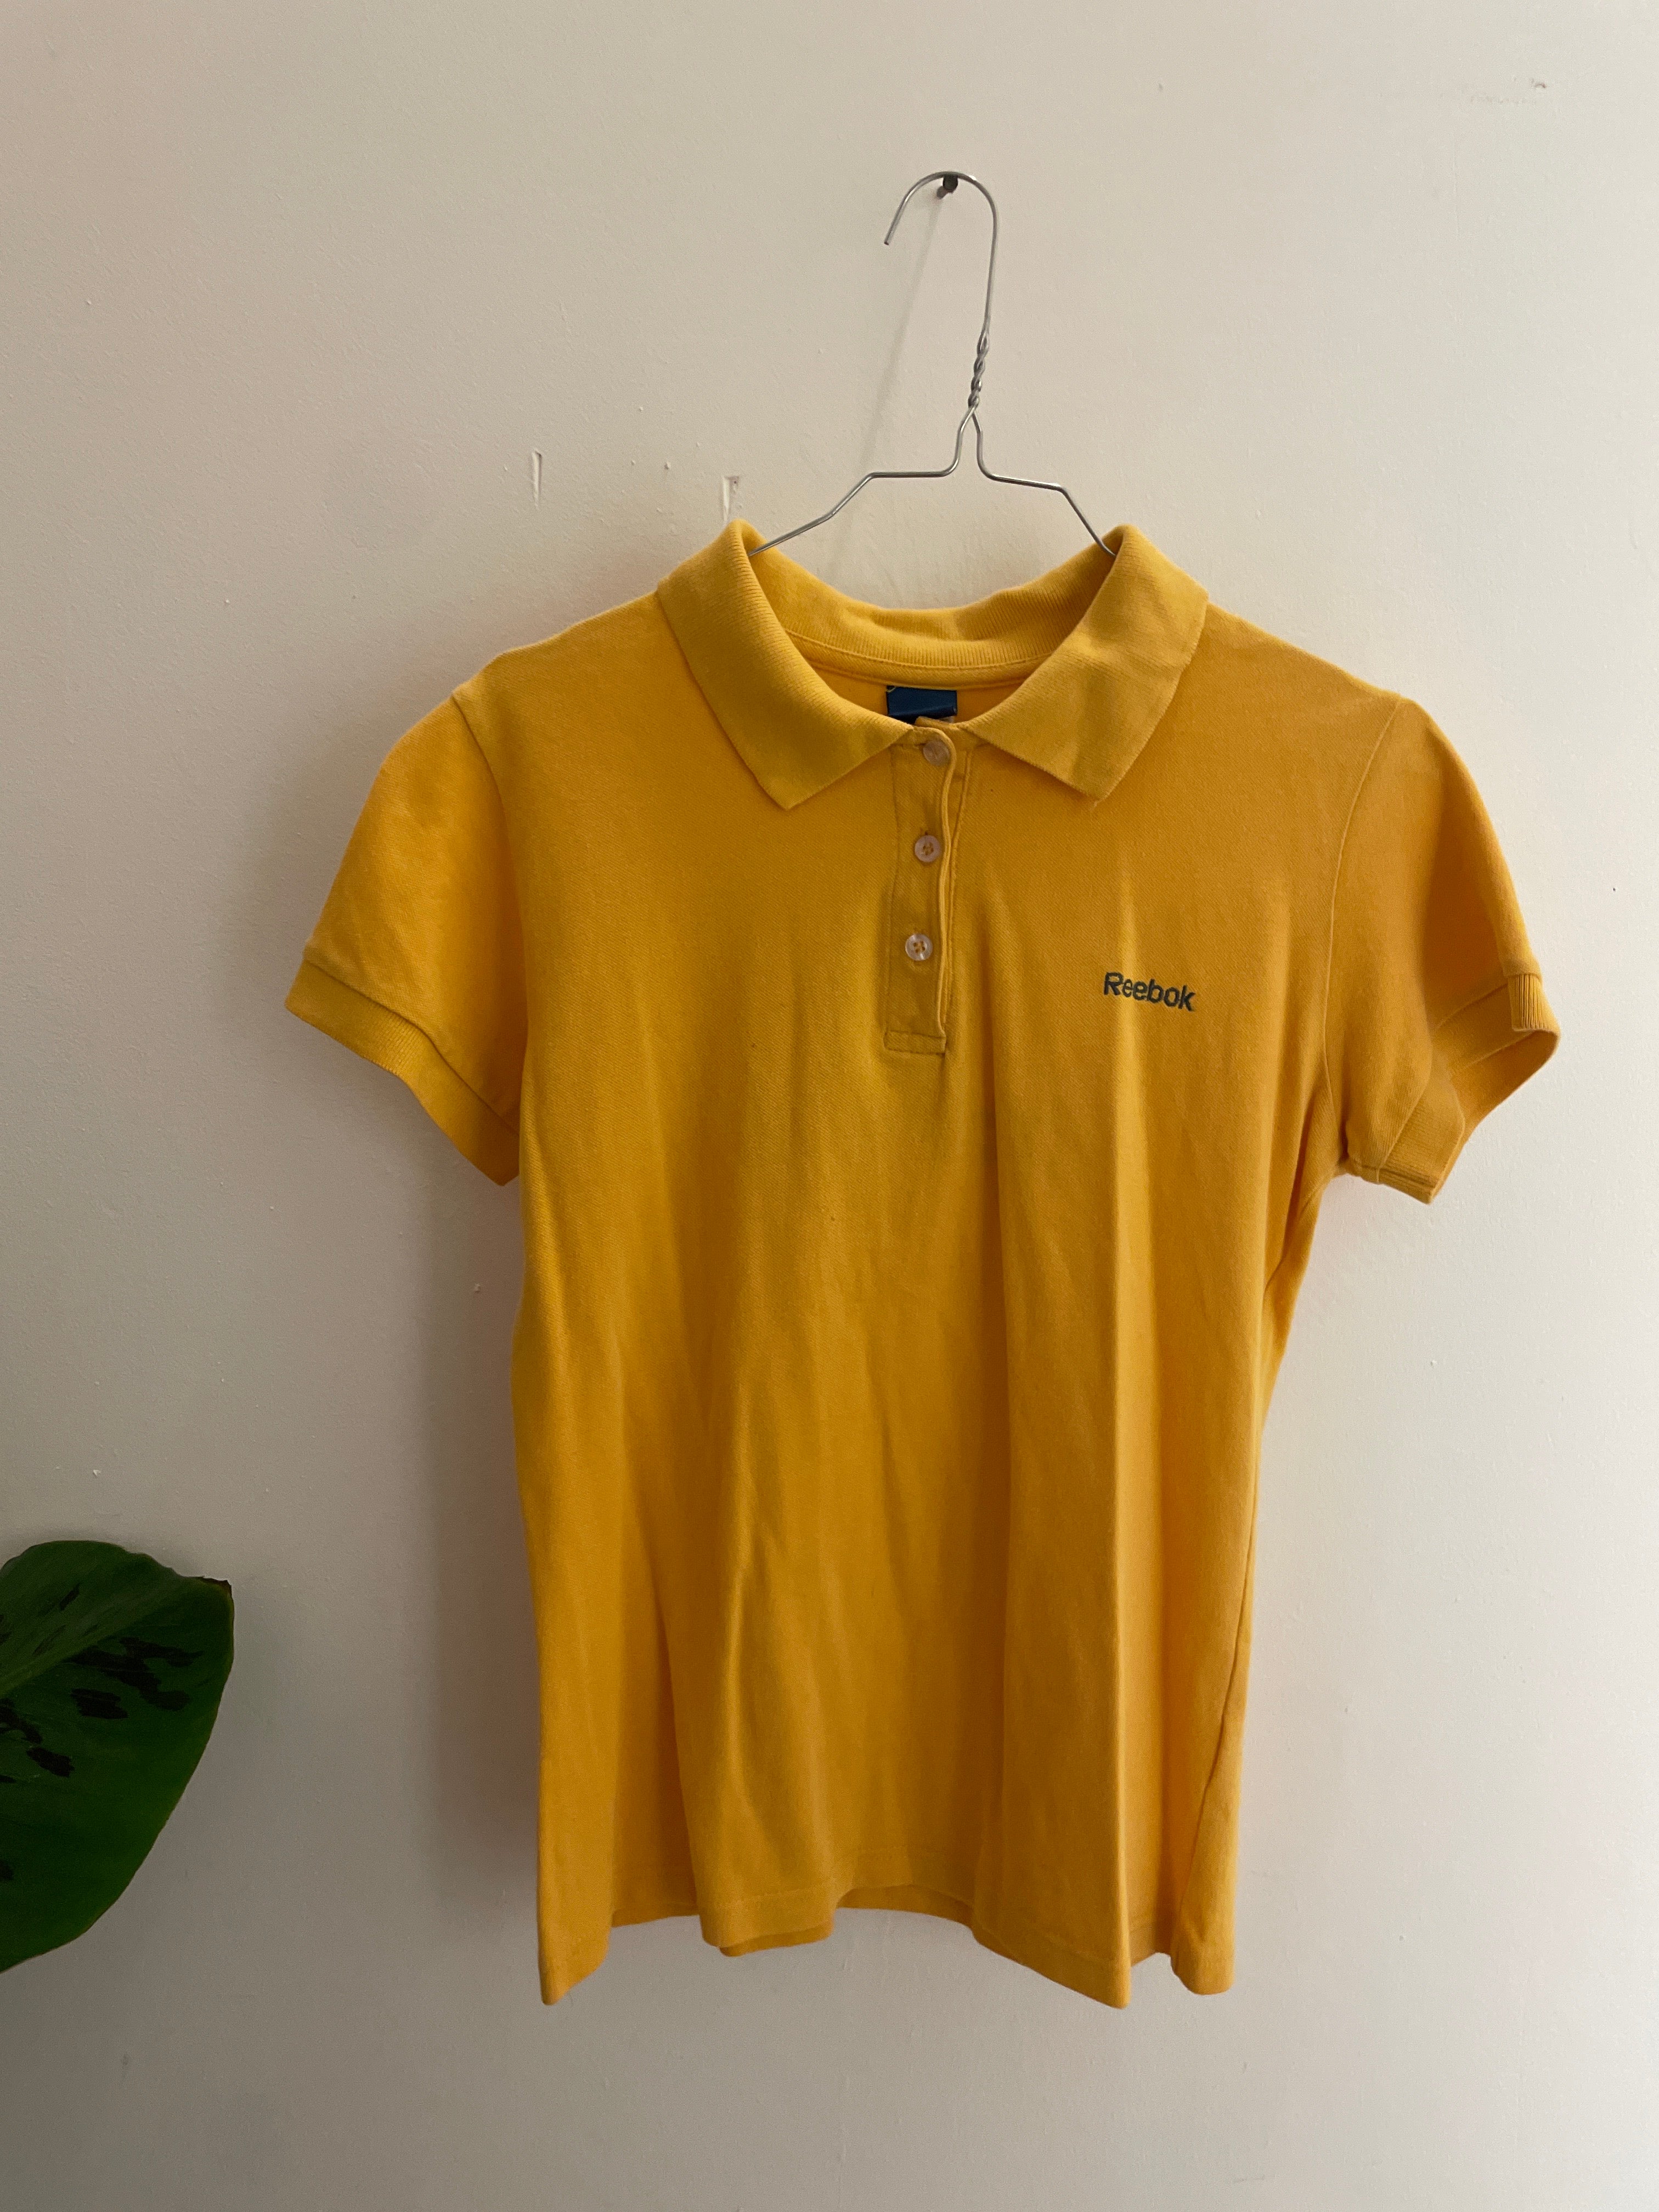 vintage reebok yellow polo shirt size S